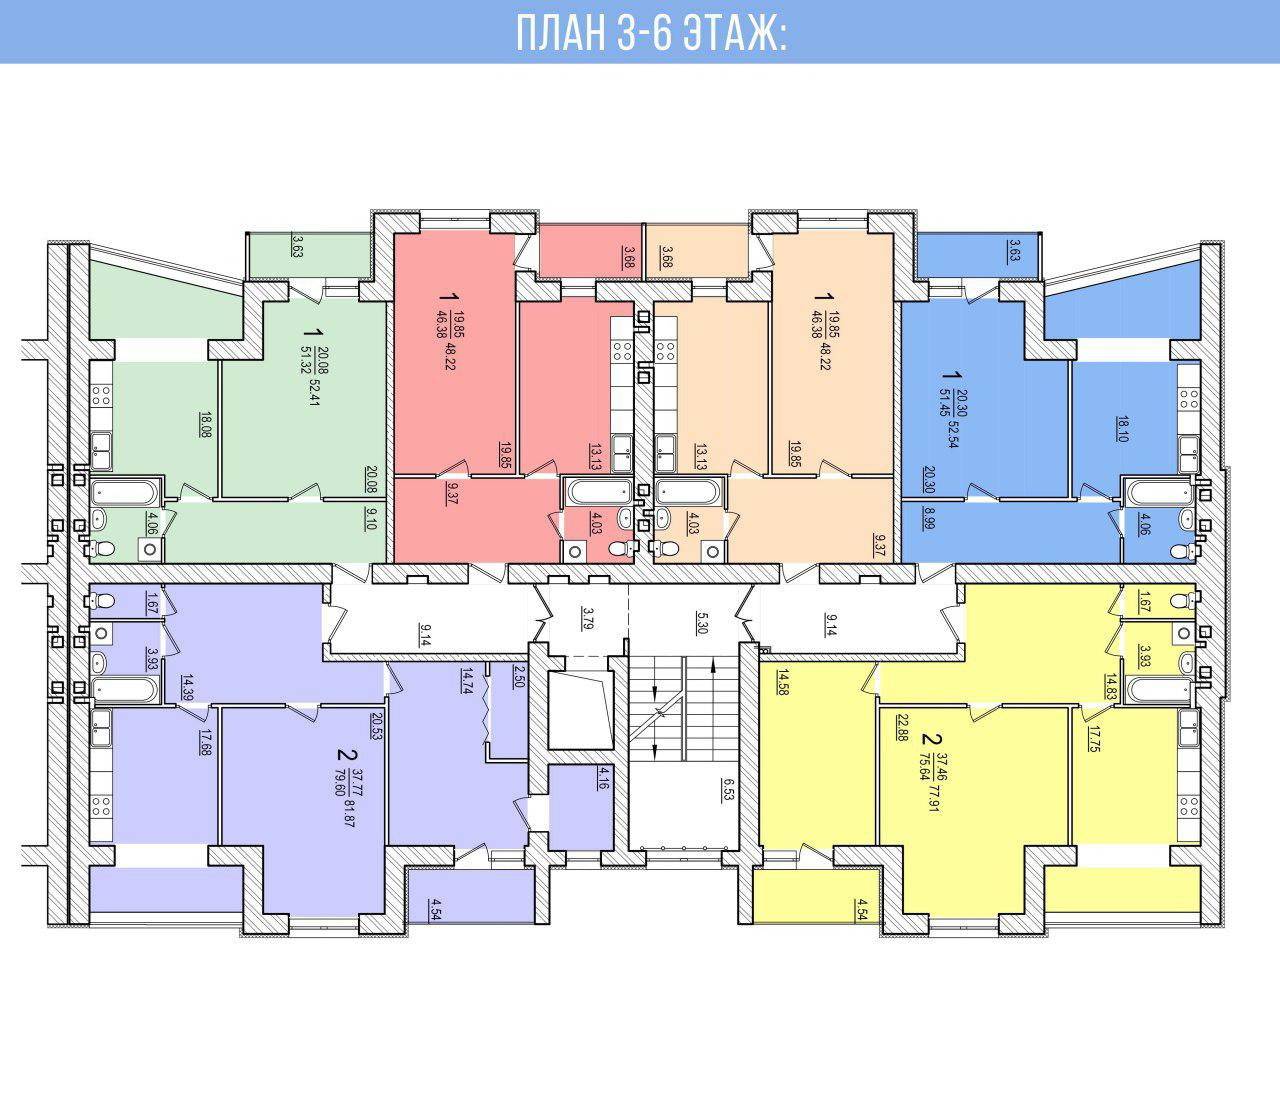 ЖК Dominant, секция 3, план 3-6 этажа